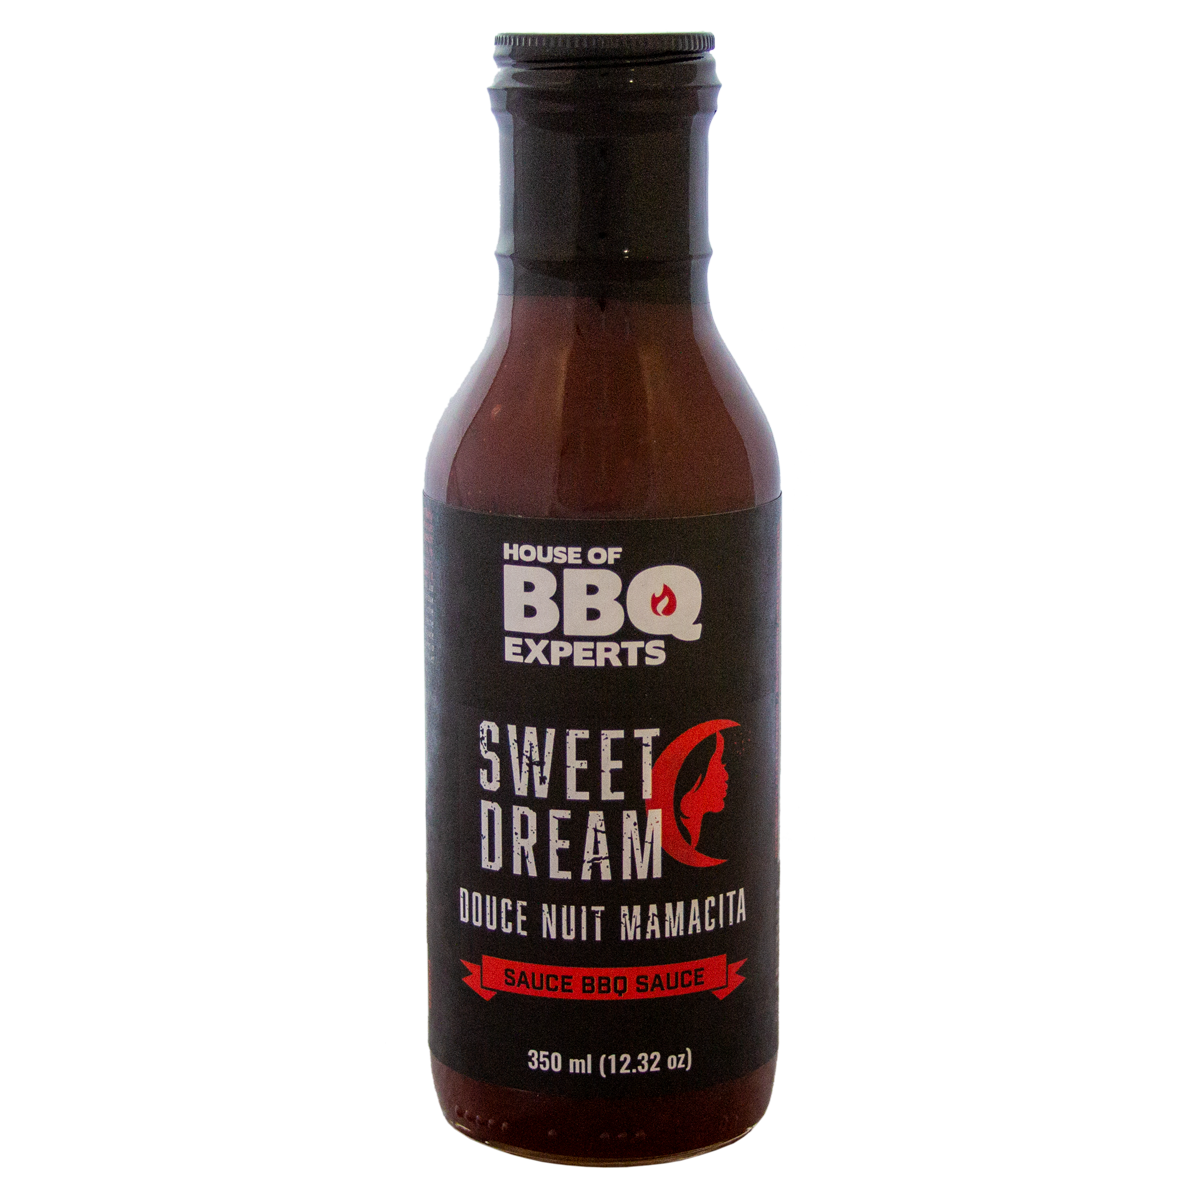 House of BBQ Experts Sweet Dream Sauce 350ml (12.32oz)